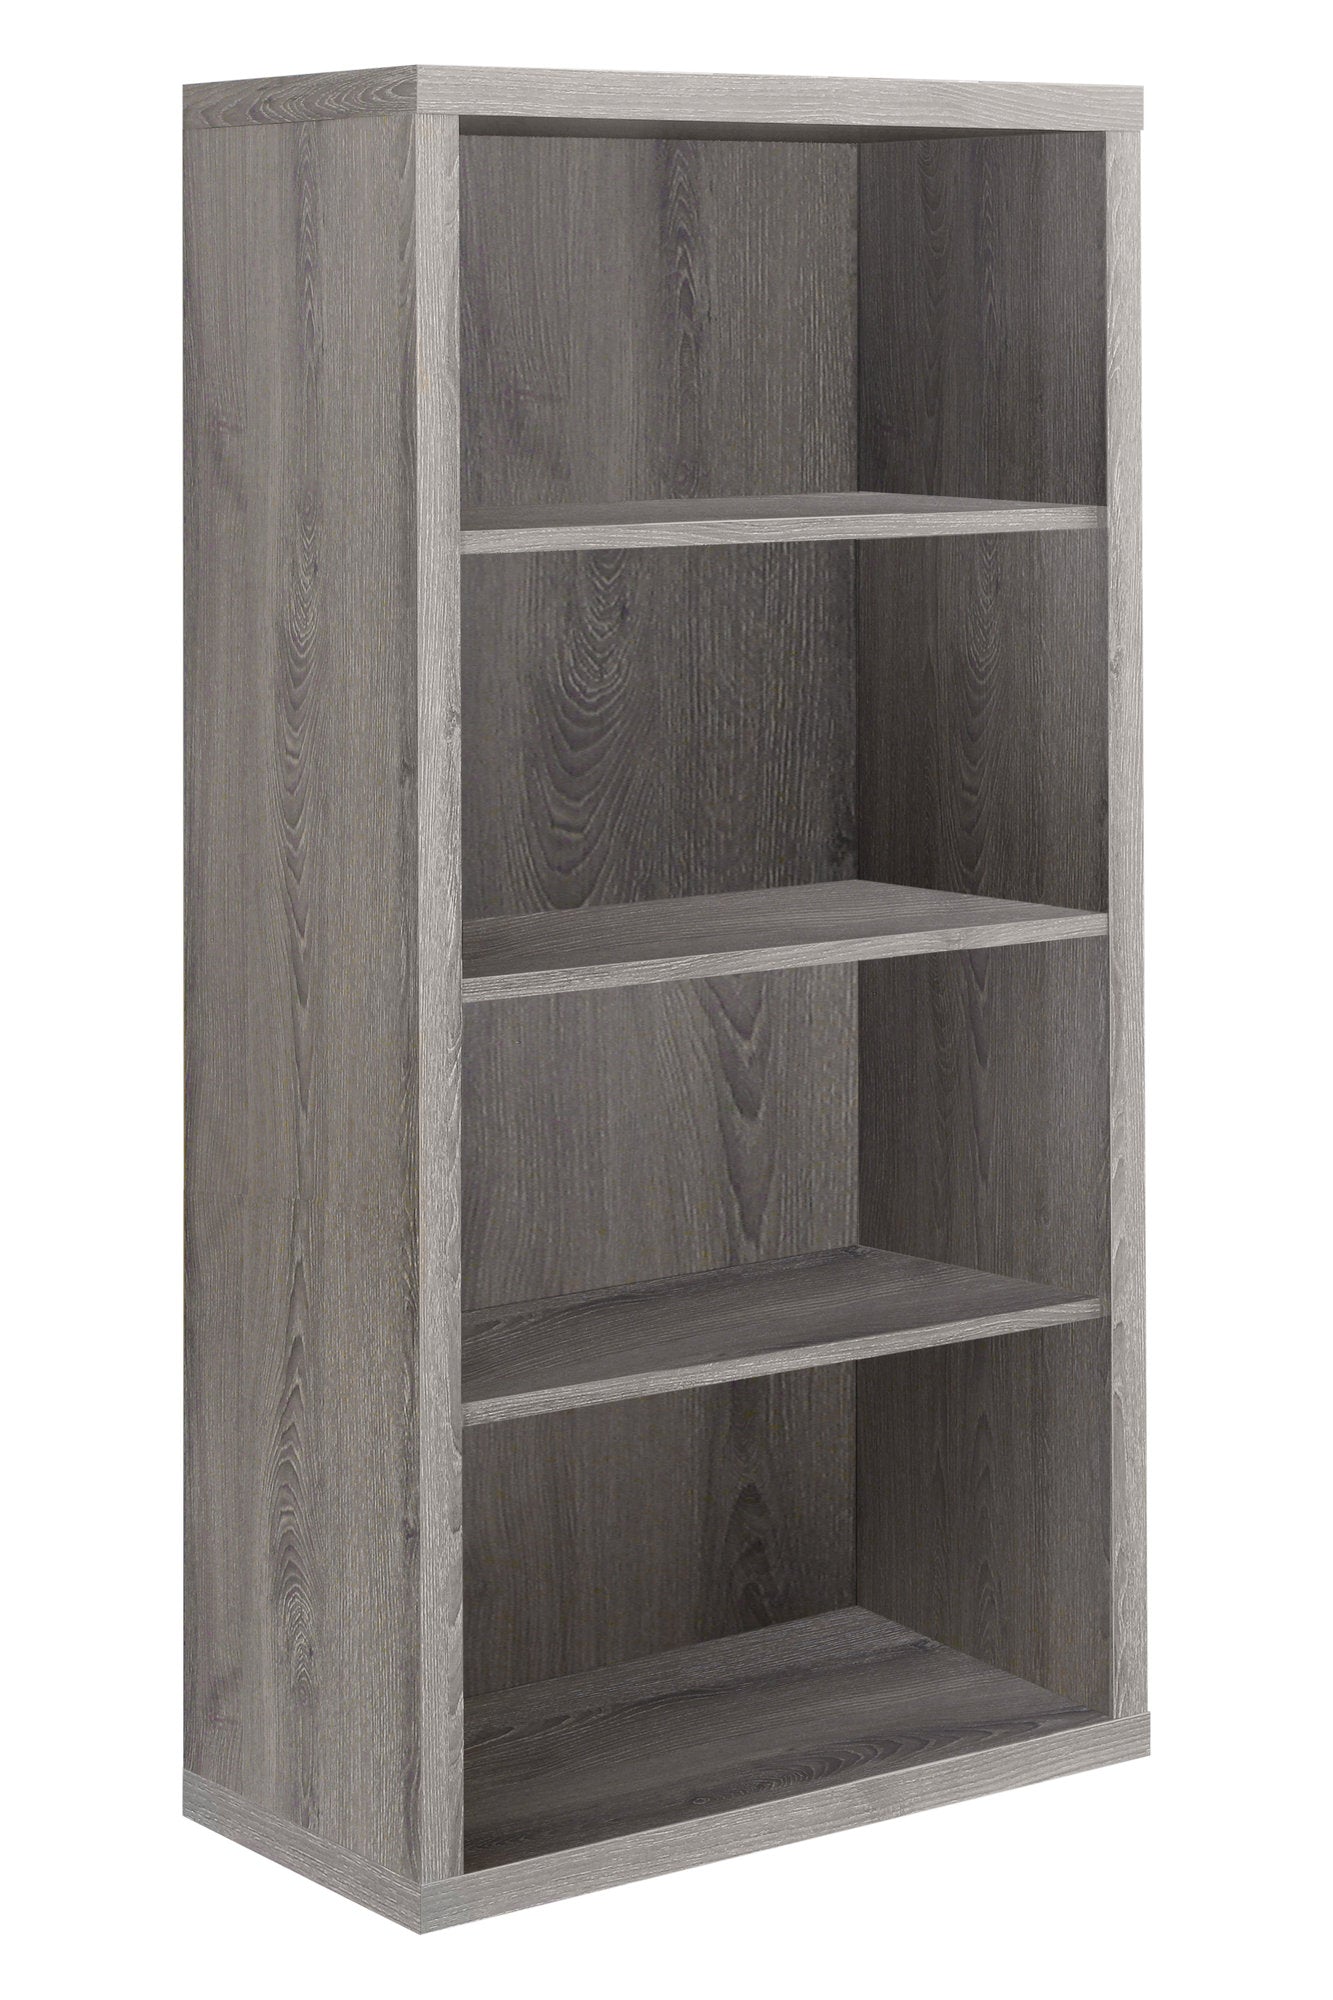 MN-887060    Bookshelf, Bookcase, Etagere, 5 Tier, Office, Bedroom, 48"H, Laminate, Dark Taupe, Contemporary, Modern